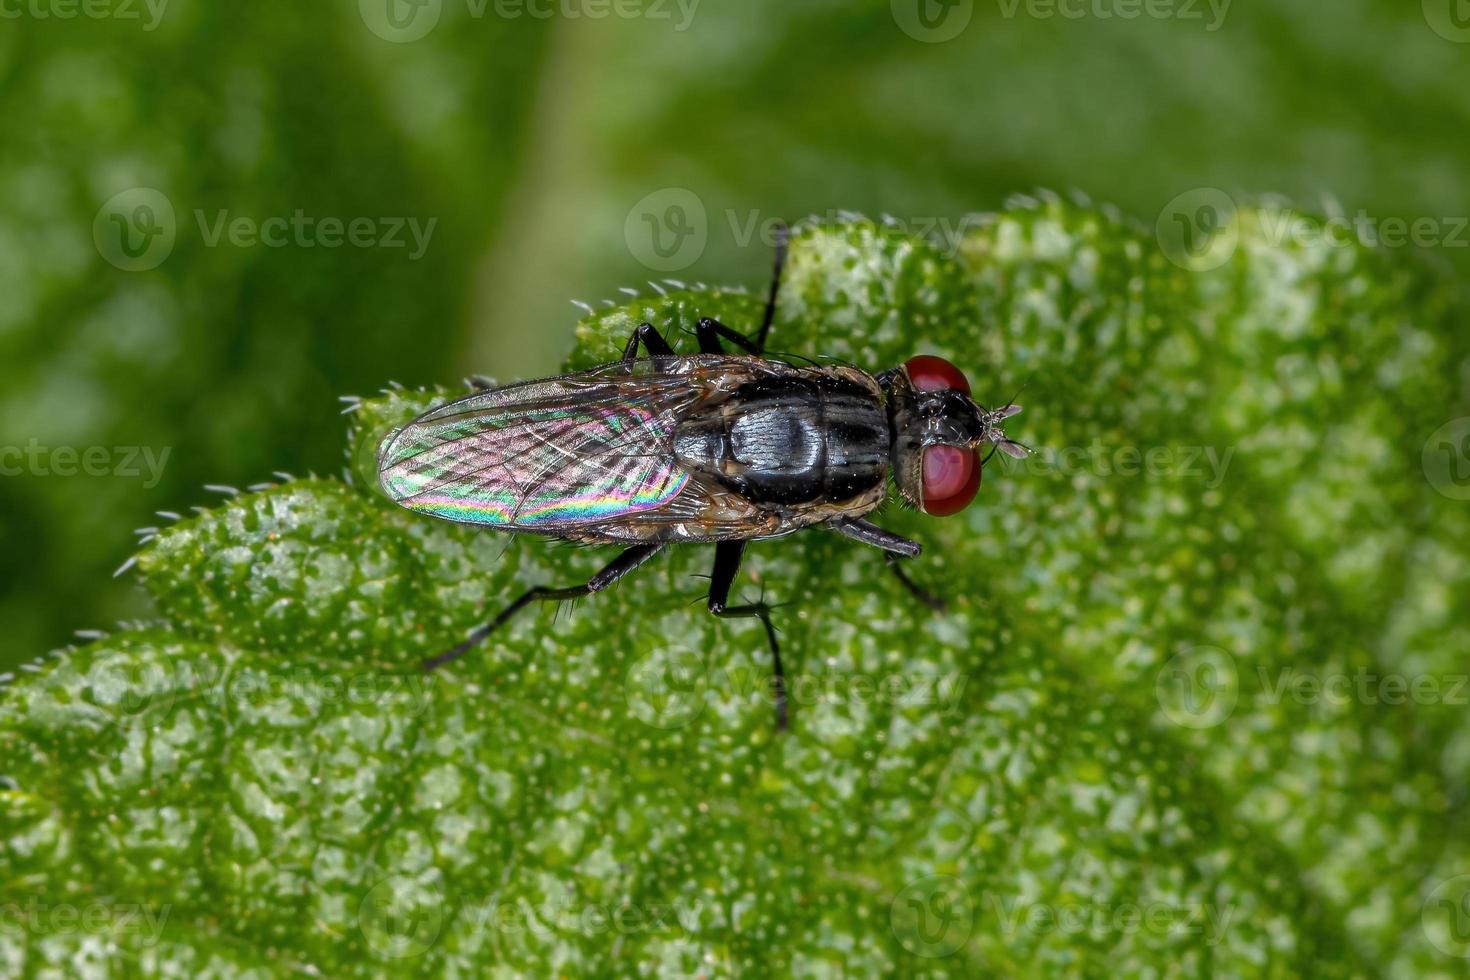 Adult Brachyceran Fly photo